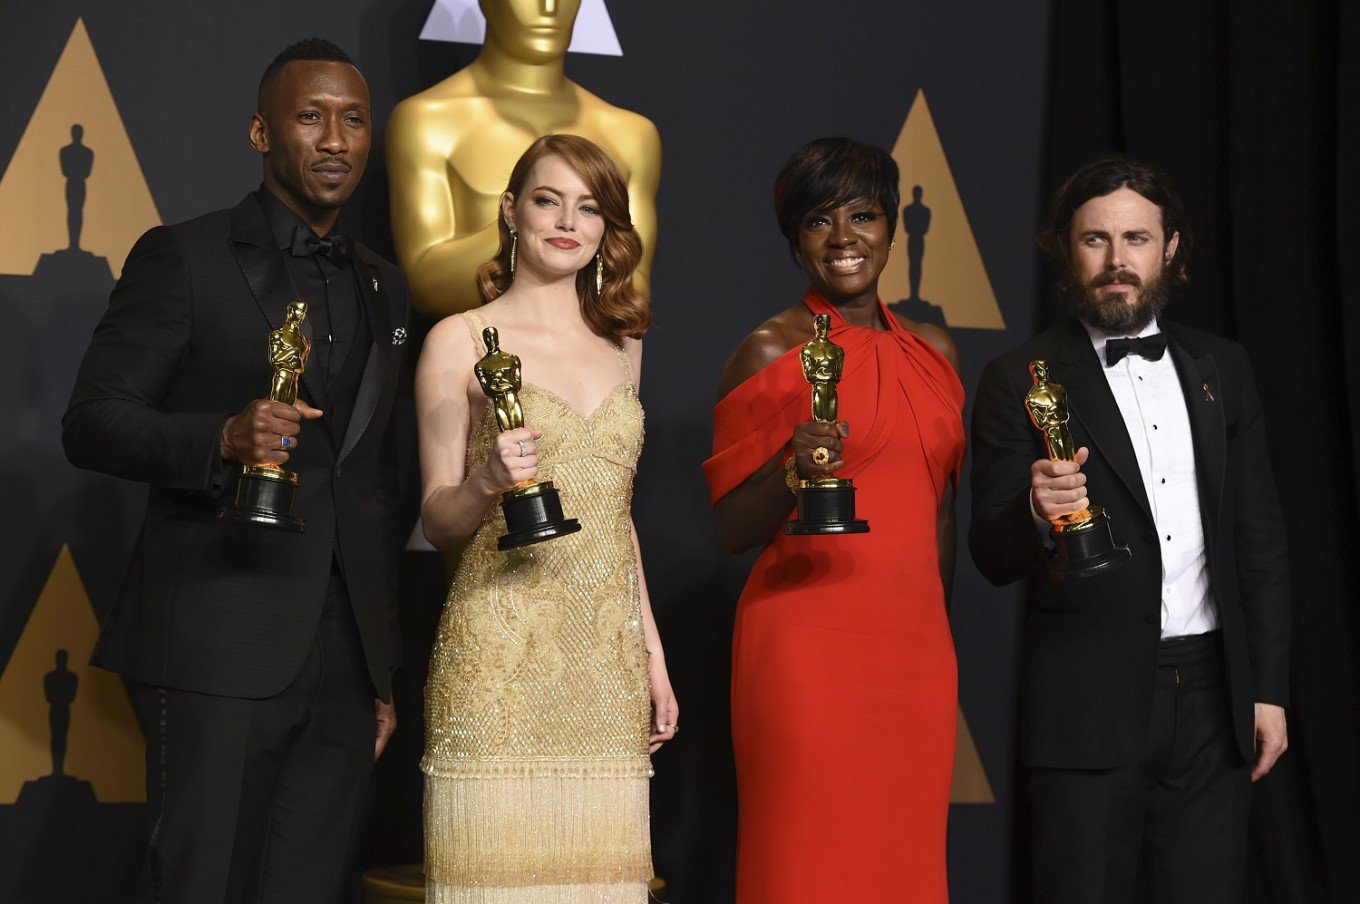 Winners From Last Night's Academy Awards